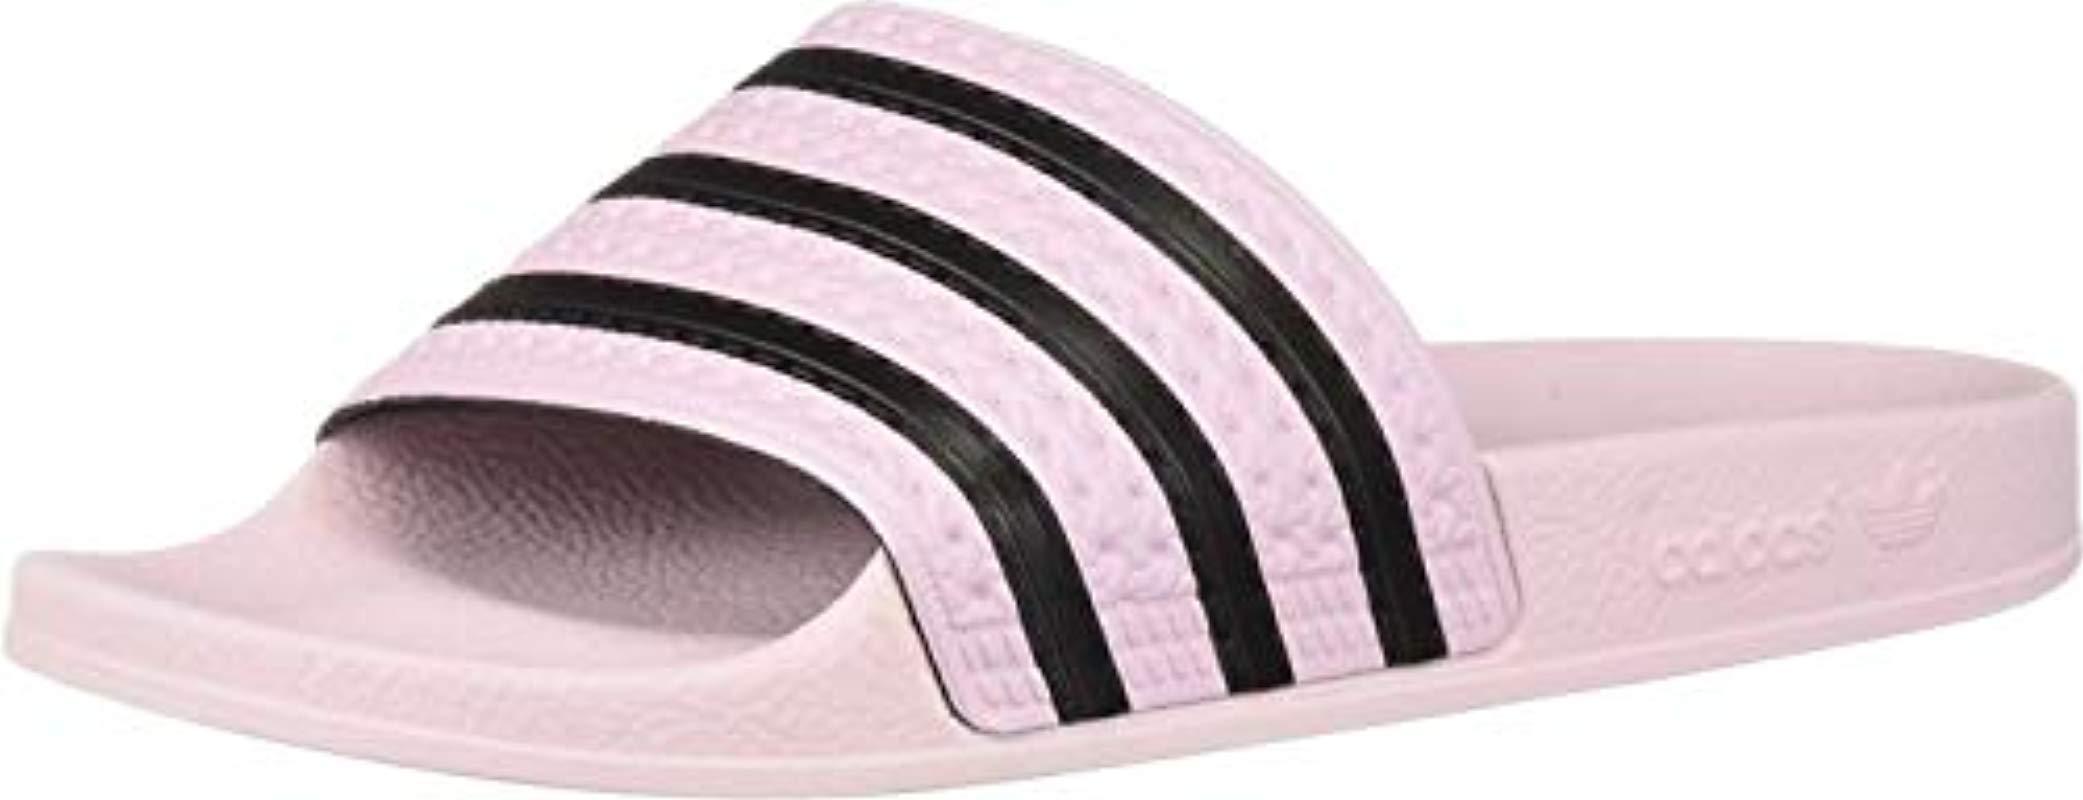 adidas slides black and pink